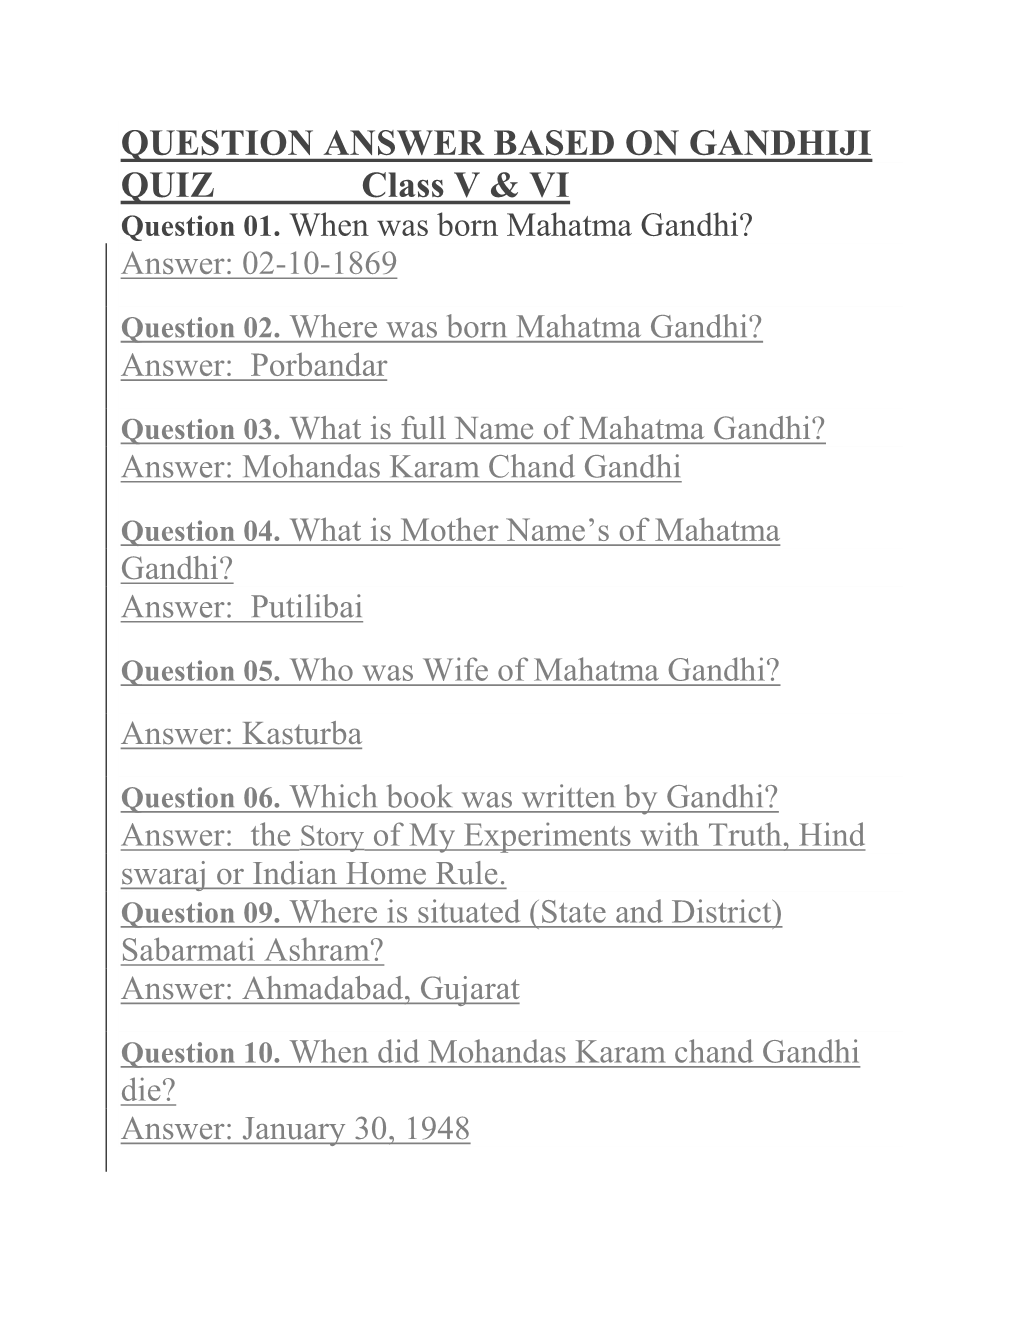 QUESTION ANSWER BASED on GANDHIJI QUIZ Class V & VI